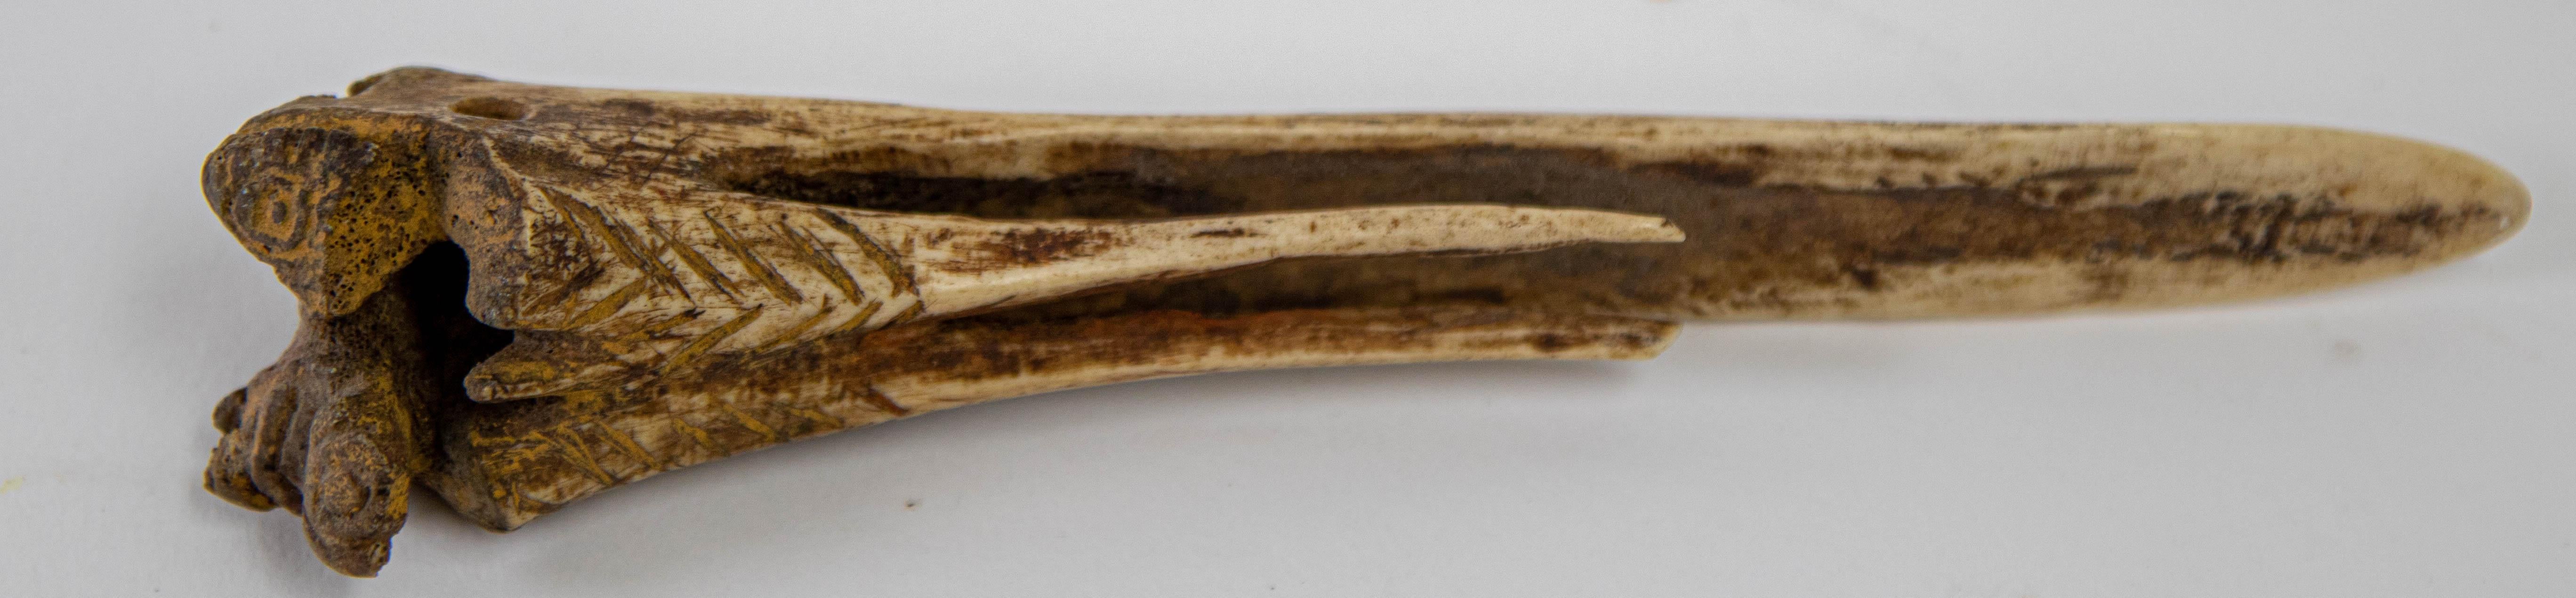 Antique Ethnic Artifact Sepik River Cassowary Bone from Papua New Guinea For Sale 13